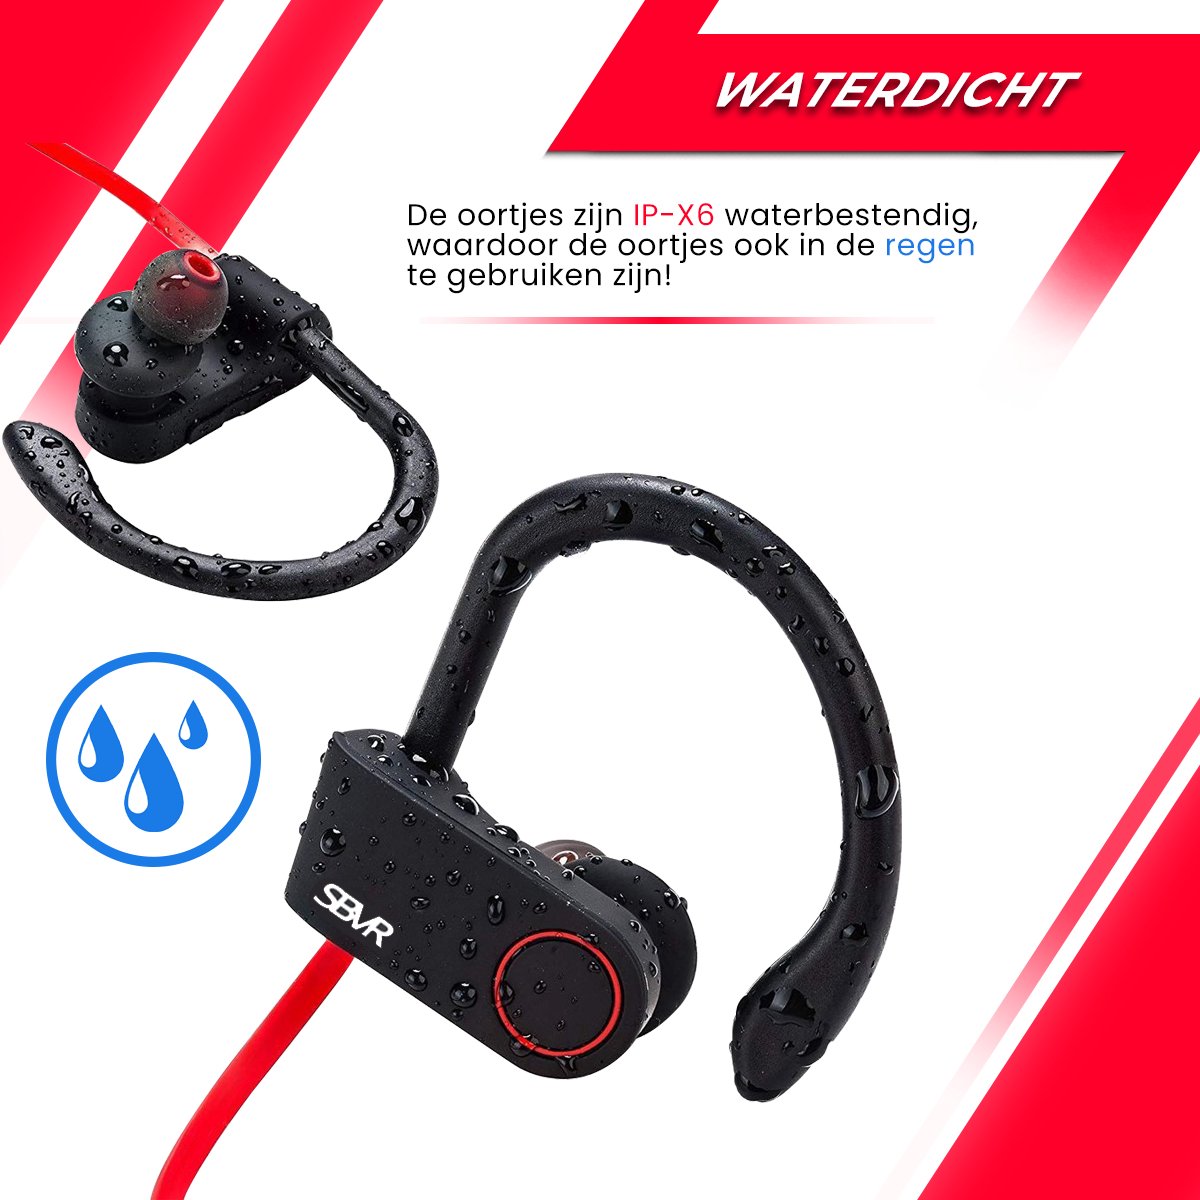 SBVR SV2 - Sport Oordopjes - Hardlopen - IPX6 Waterproof - Bluetooth 5.0 -  Zwart | bol.com